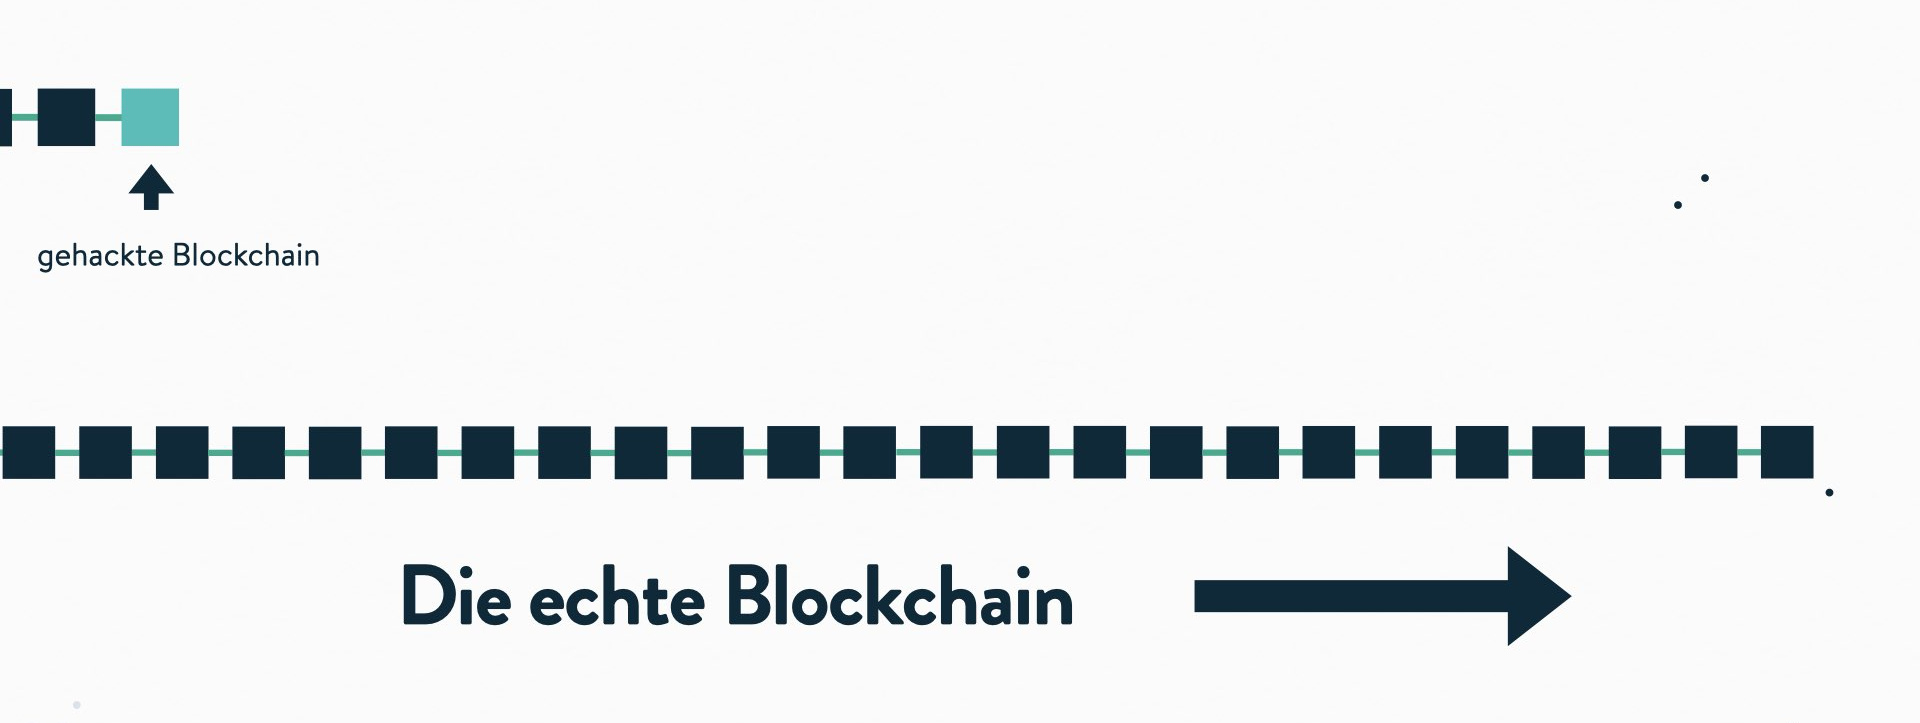 Blockchain ist so gut wie unhackbar